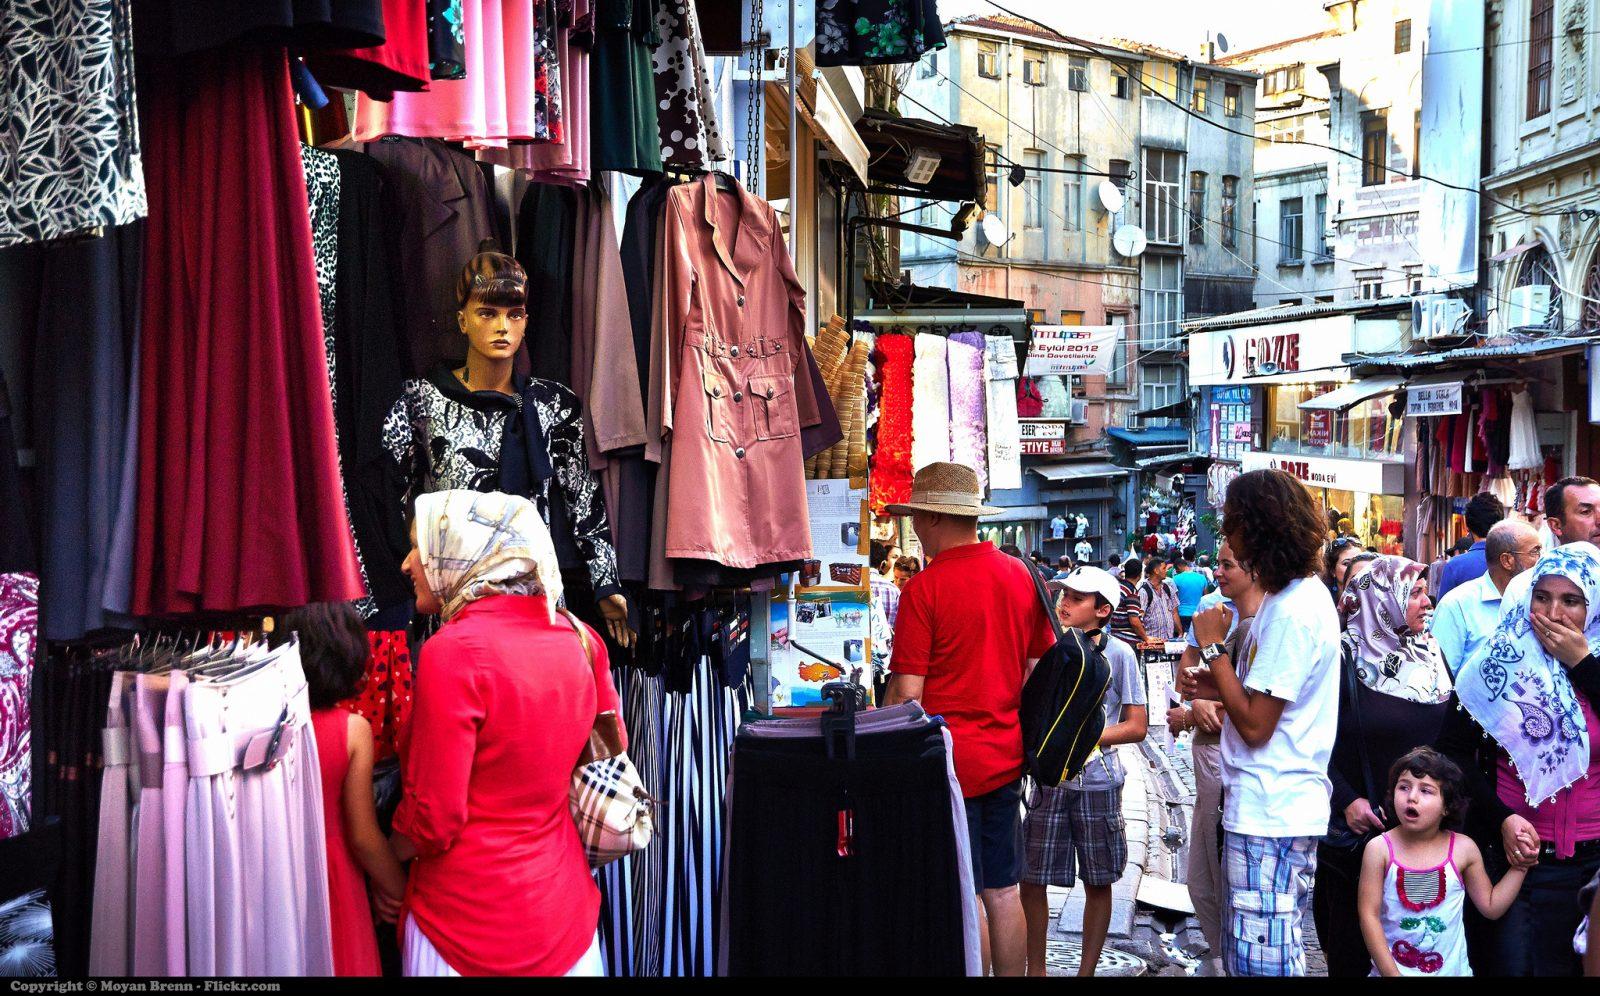 People shop at a bazaar in Istanbul, Turkey. Photo courtesy of Moyan Brenn.